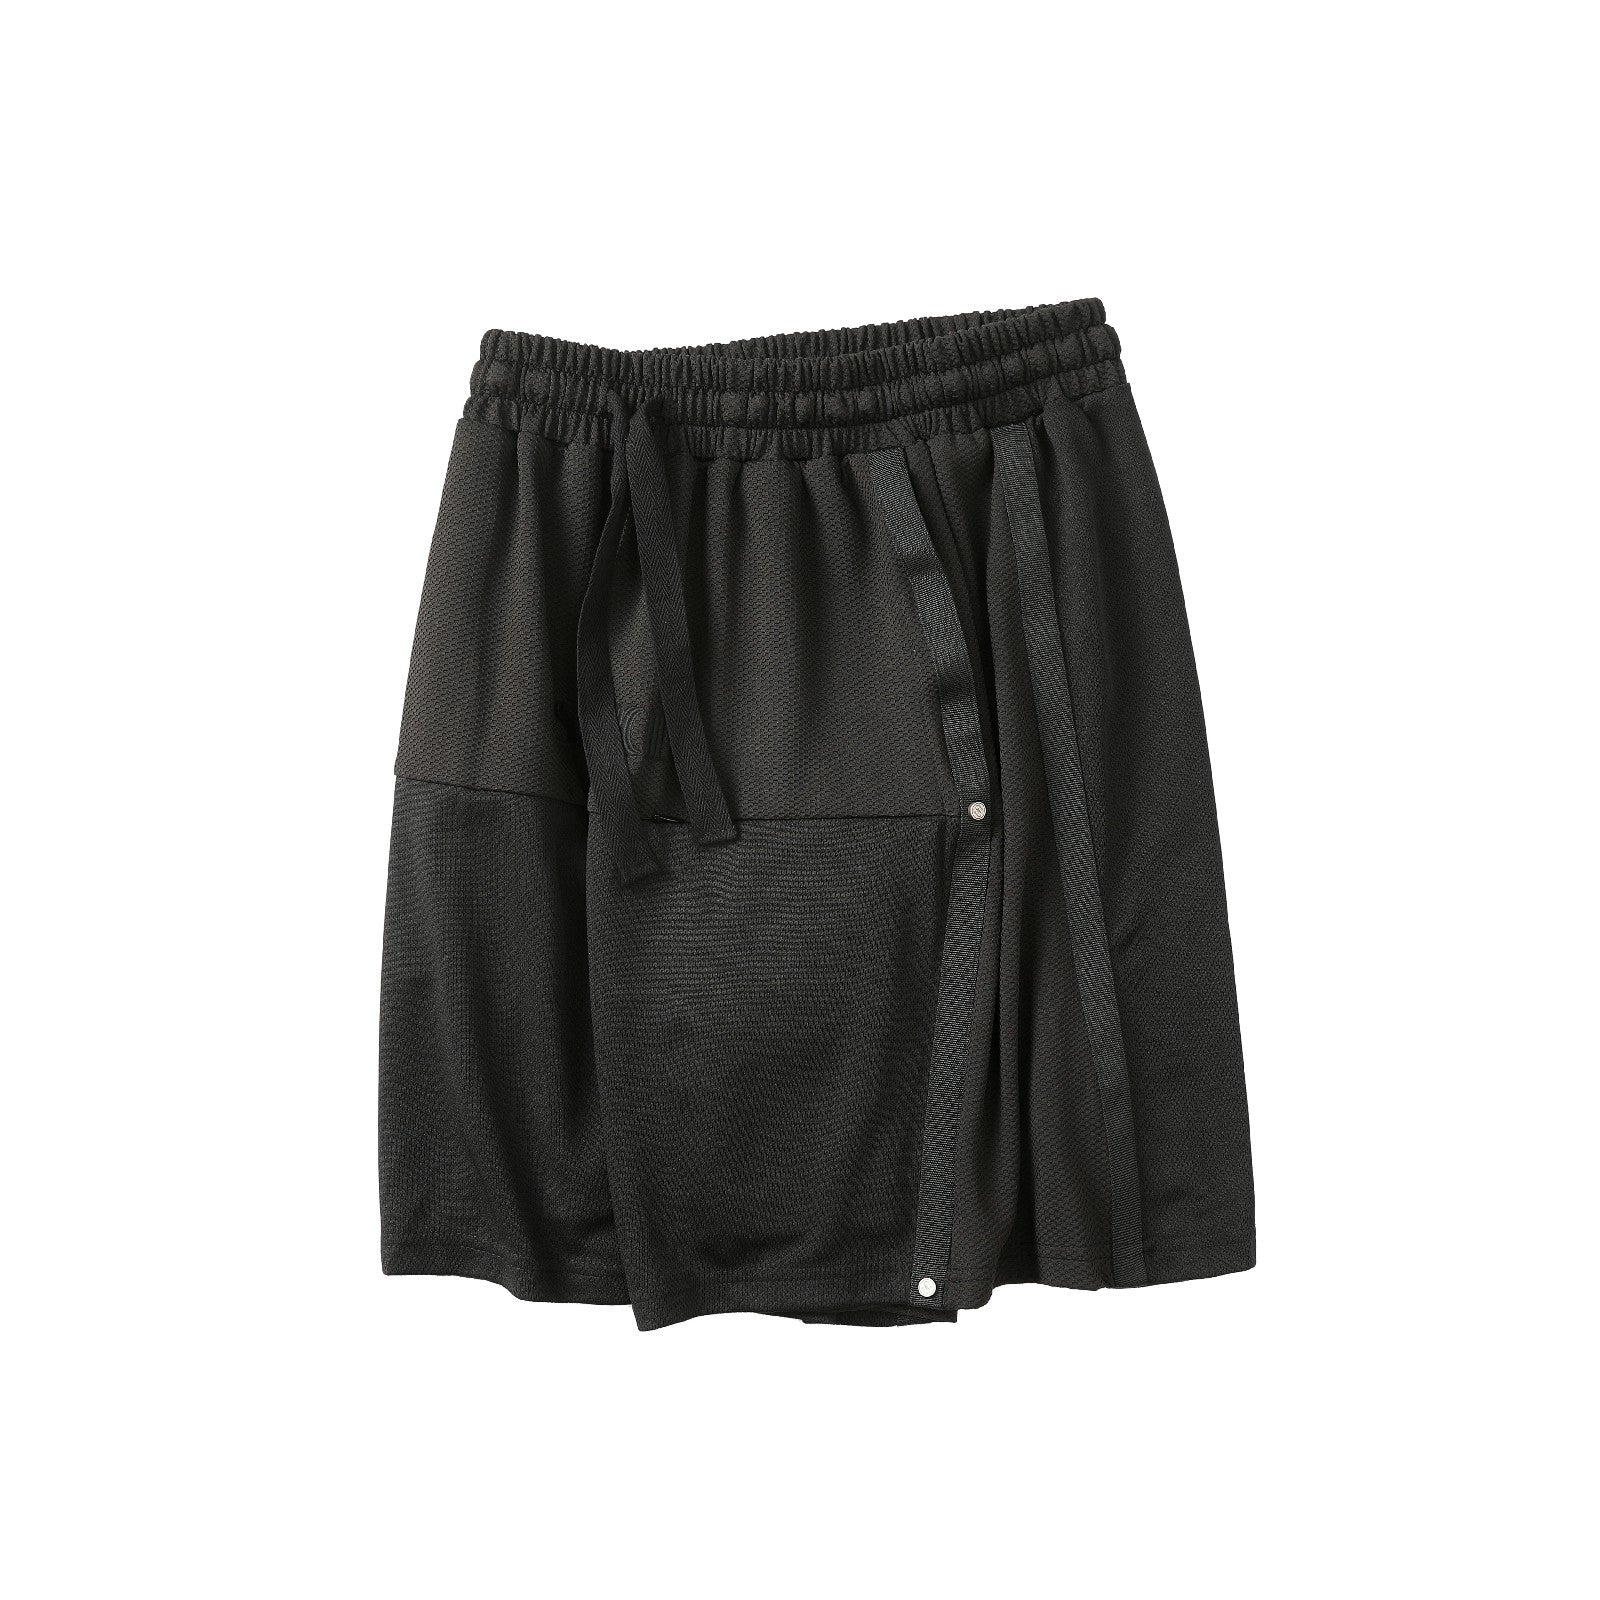 'Drawstring' Shorts - Santo 